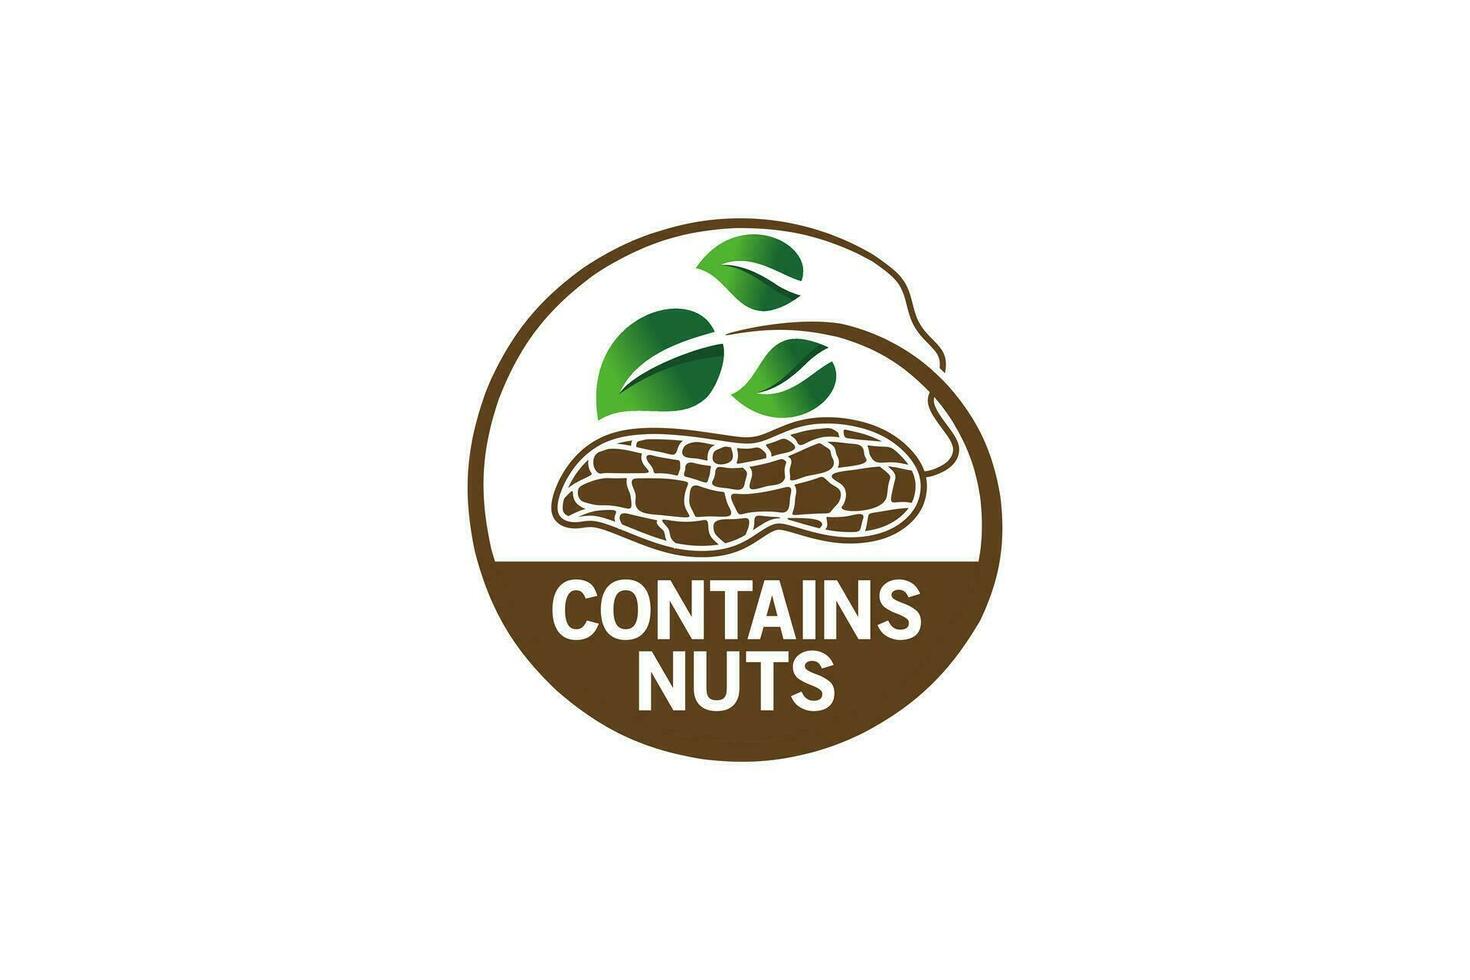 Peanuts logo design, vector illustration label contains natural peanuts